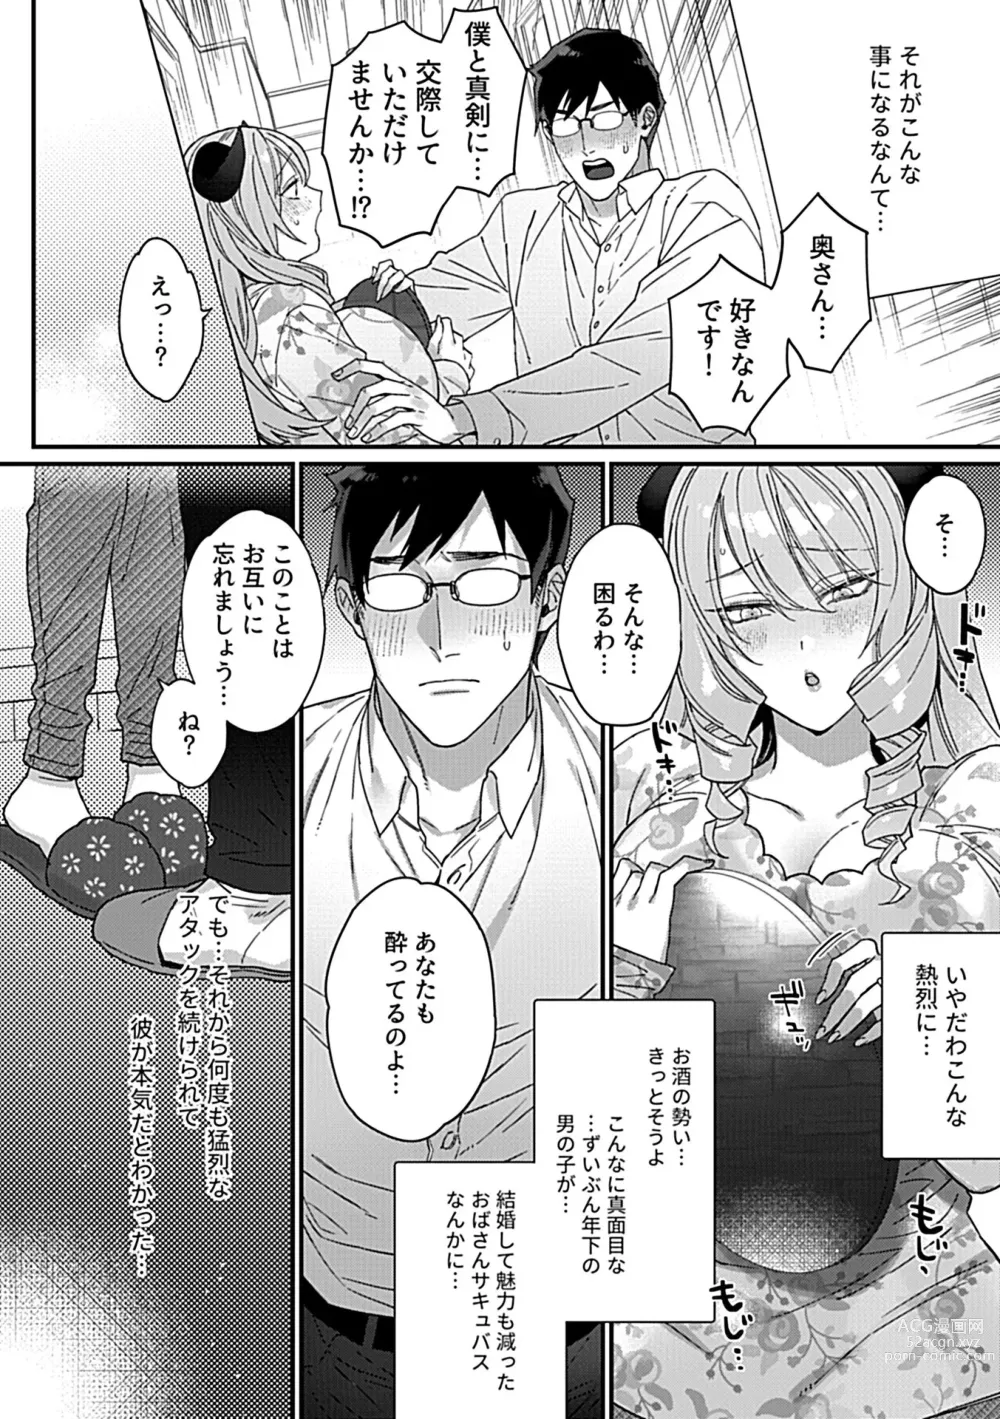 Page 6 of manga COMIC GEE vol.23